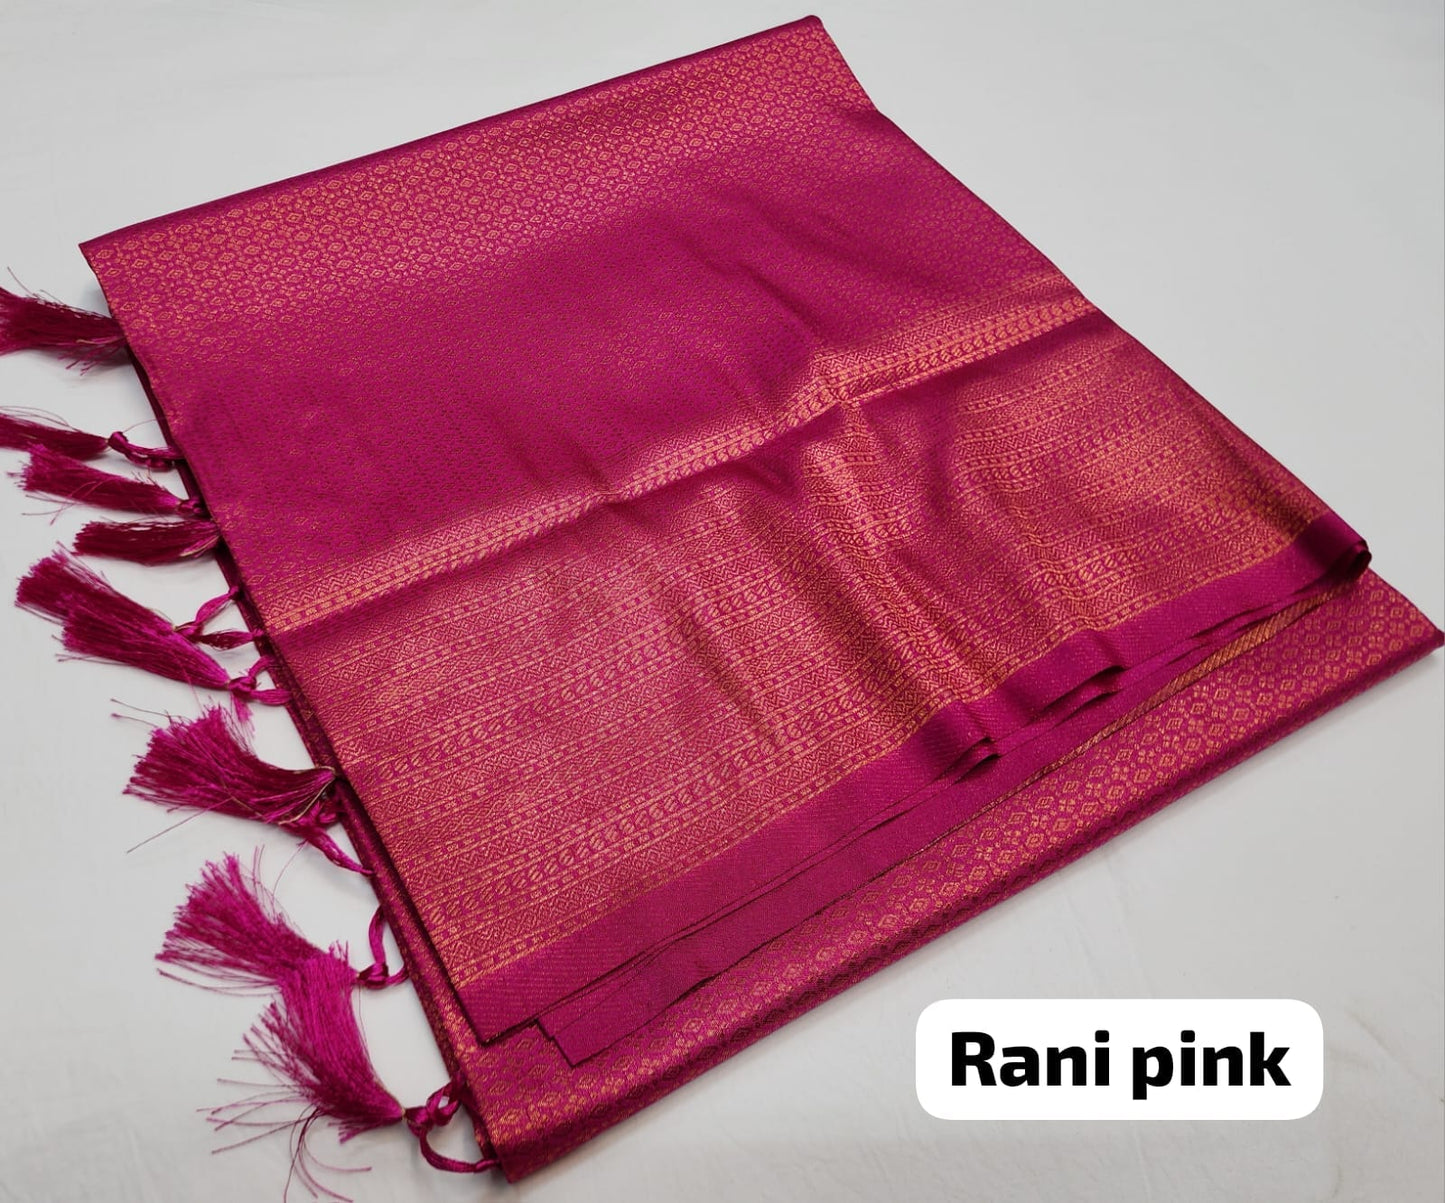 Kuberapattu soft silk saree Rani pink colour